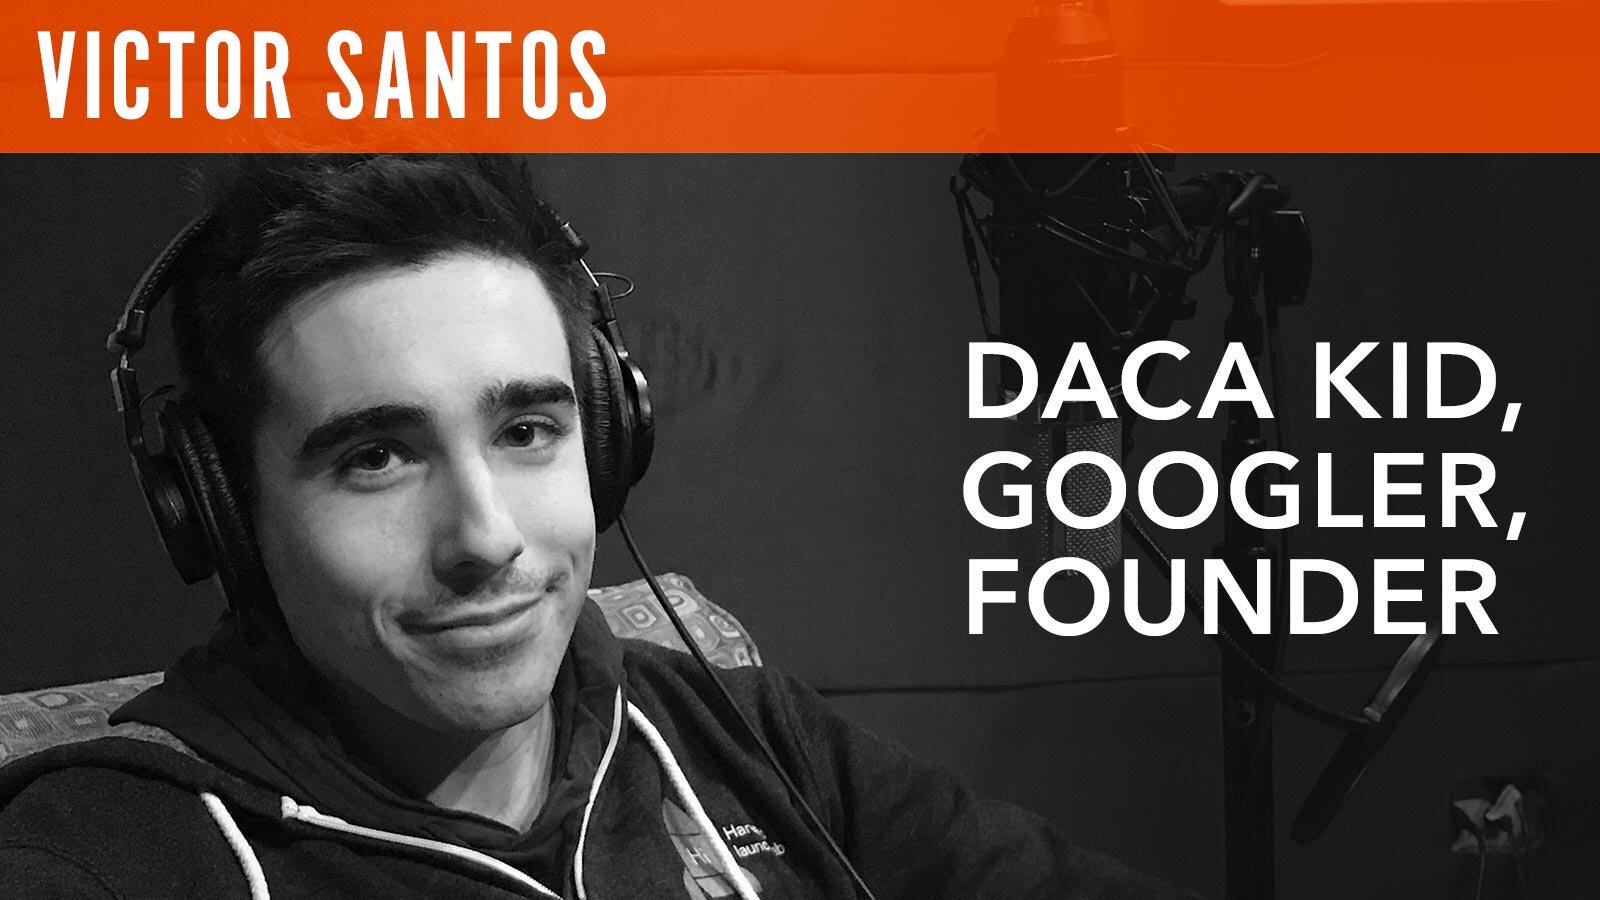 Victor Santos, "DACA Kid, Googler, Founder"